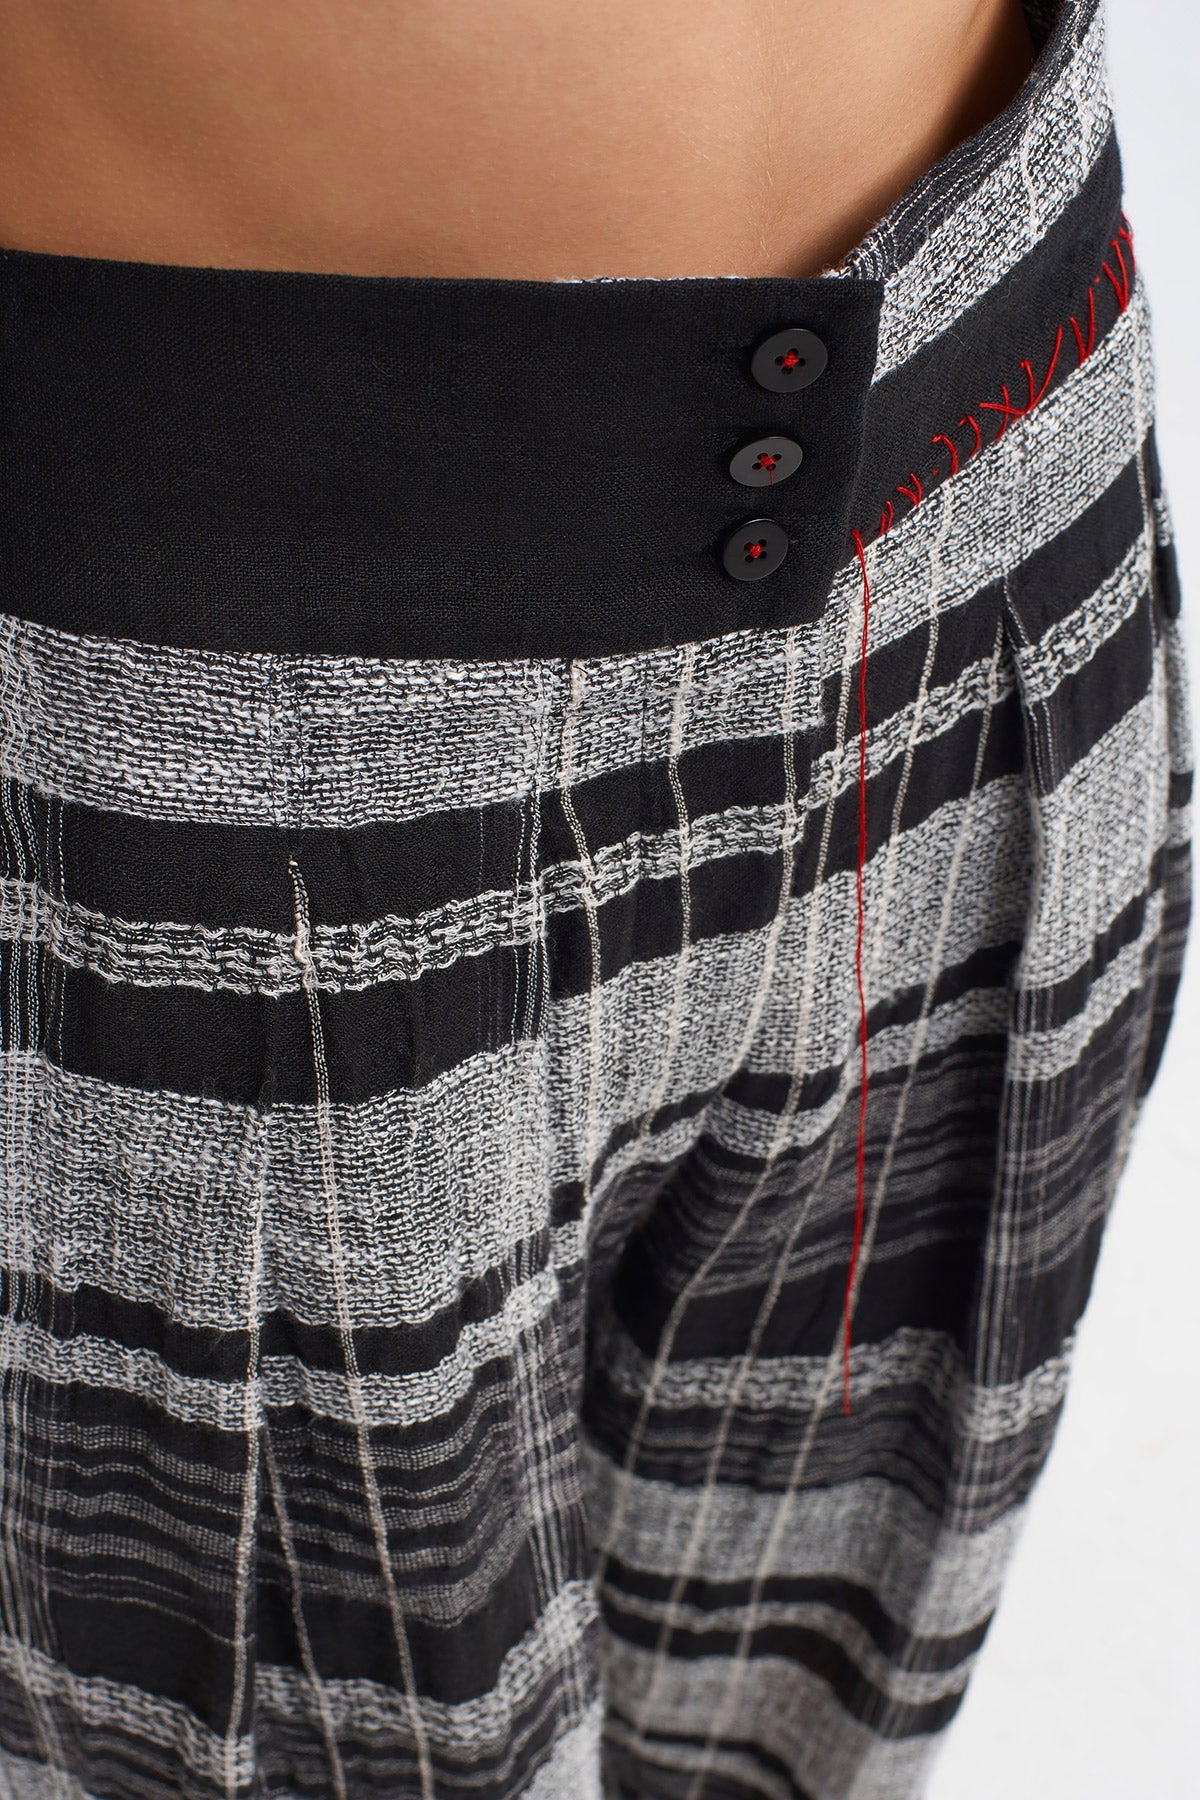 Black / Black Red Stitch Detail Plaid Pants-Y243013002